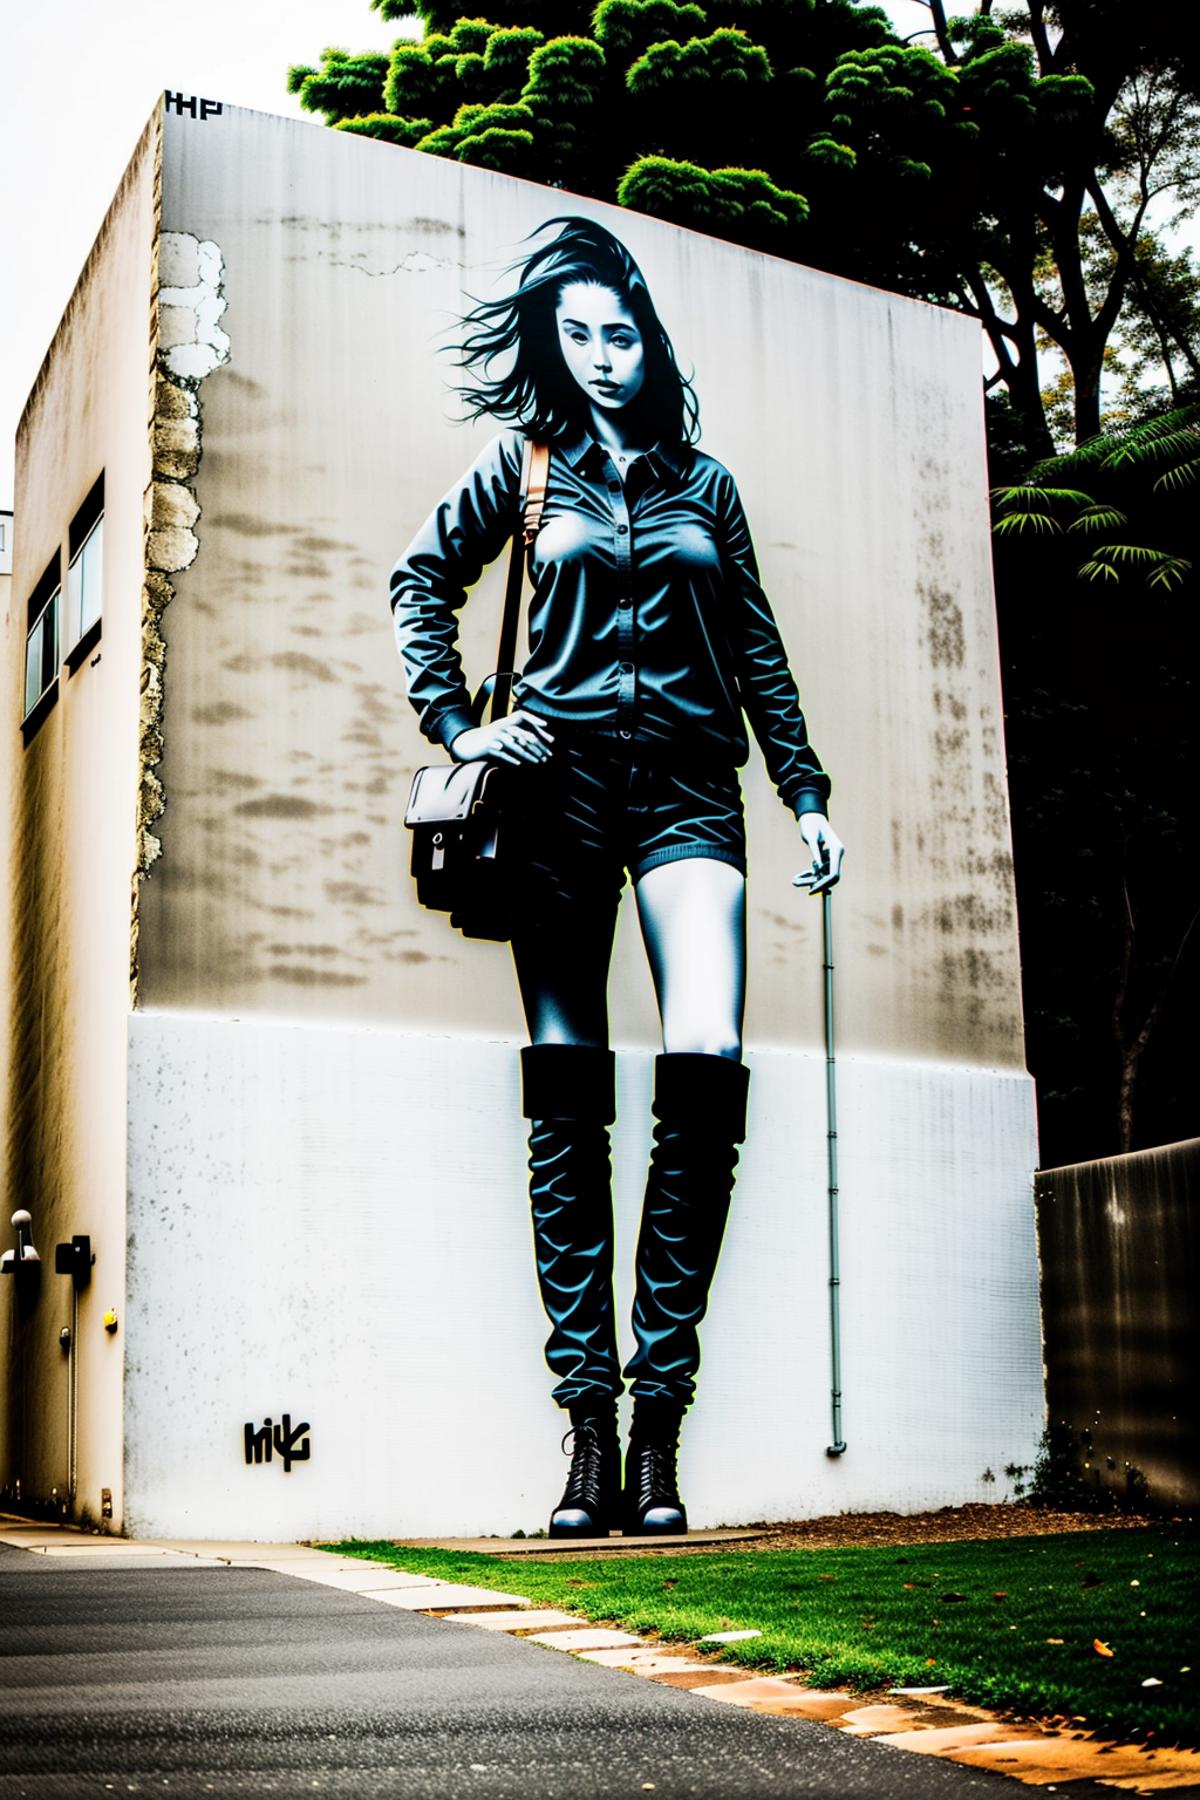 Street Art image by Ciro_Negrogni